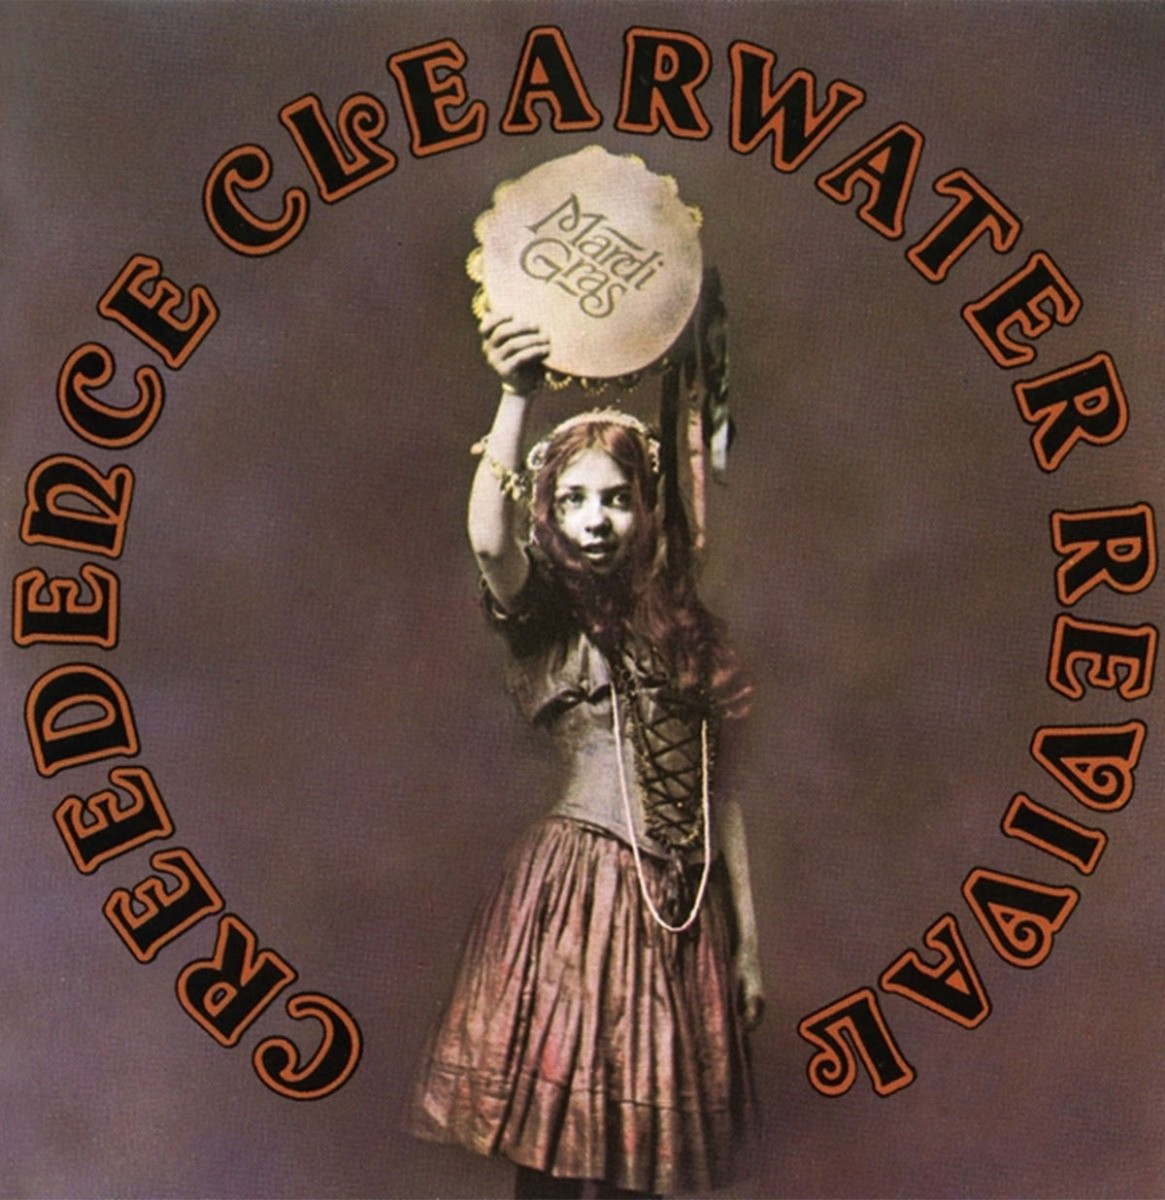 Creedence Clearwater Revival - Mardi Gras (Half Speed Mastering) LP